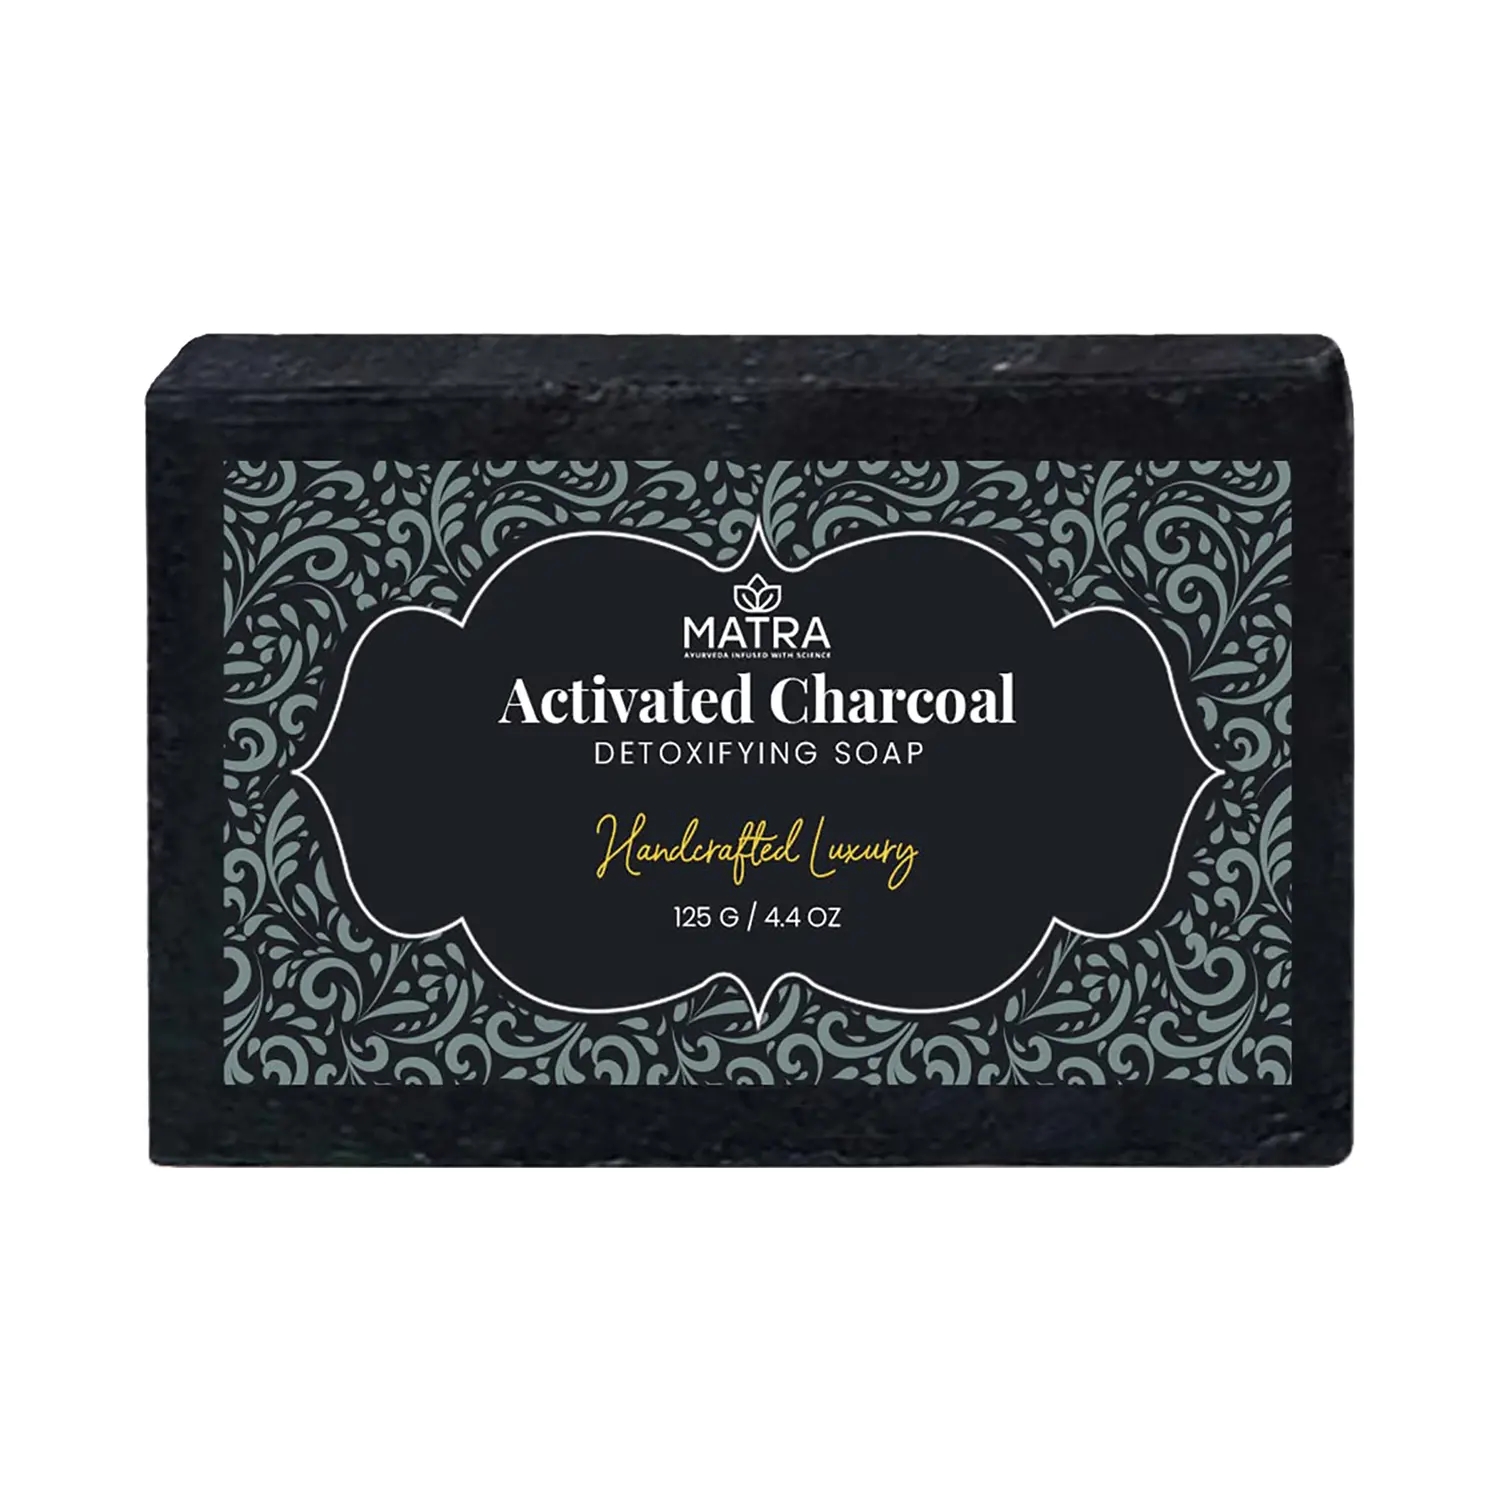 Matra Activated Charcoal Soap with Aloe Vera and Tea Tree (125g)